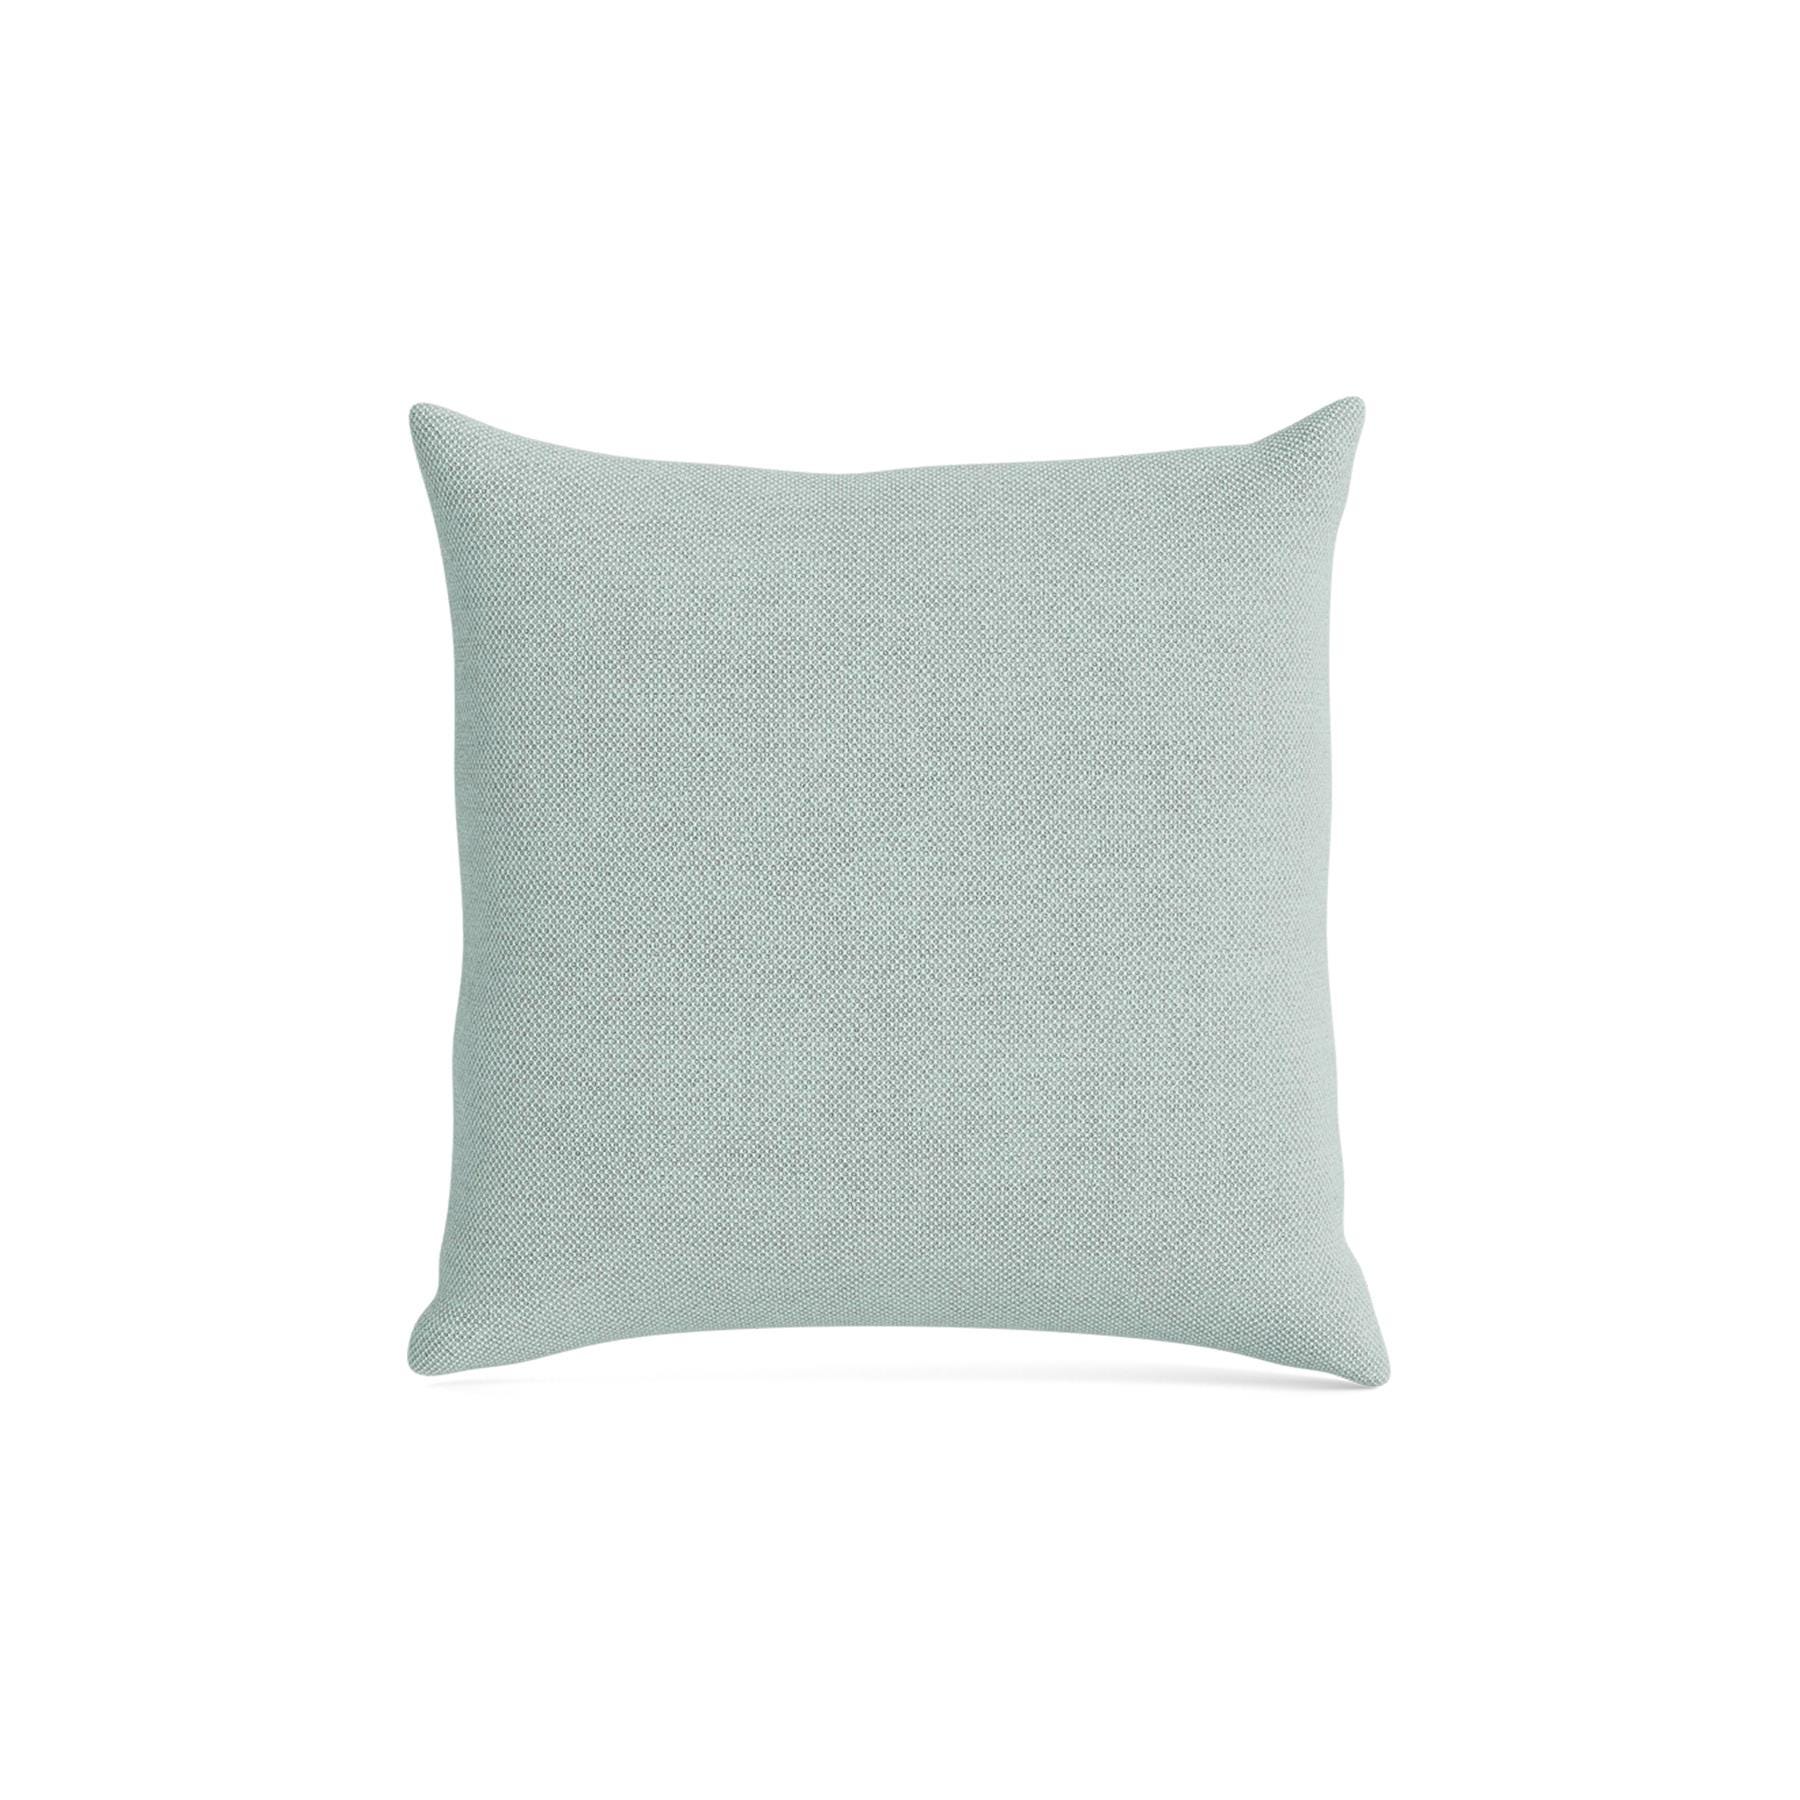 Make Nordic Pillow 40cmx40cm Fiord 721 Down And Fibers Blue